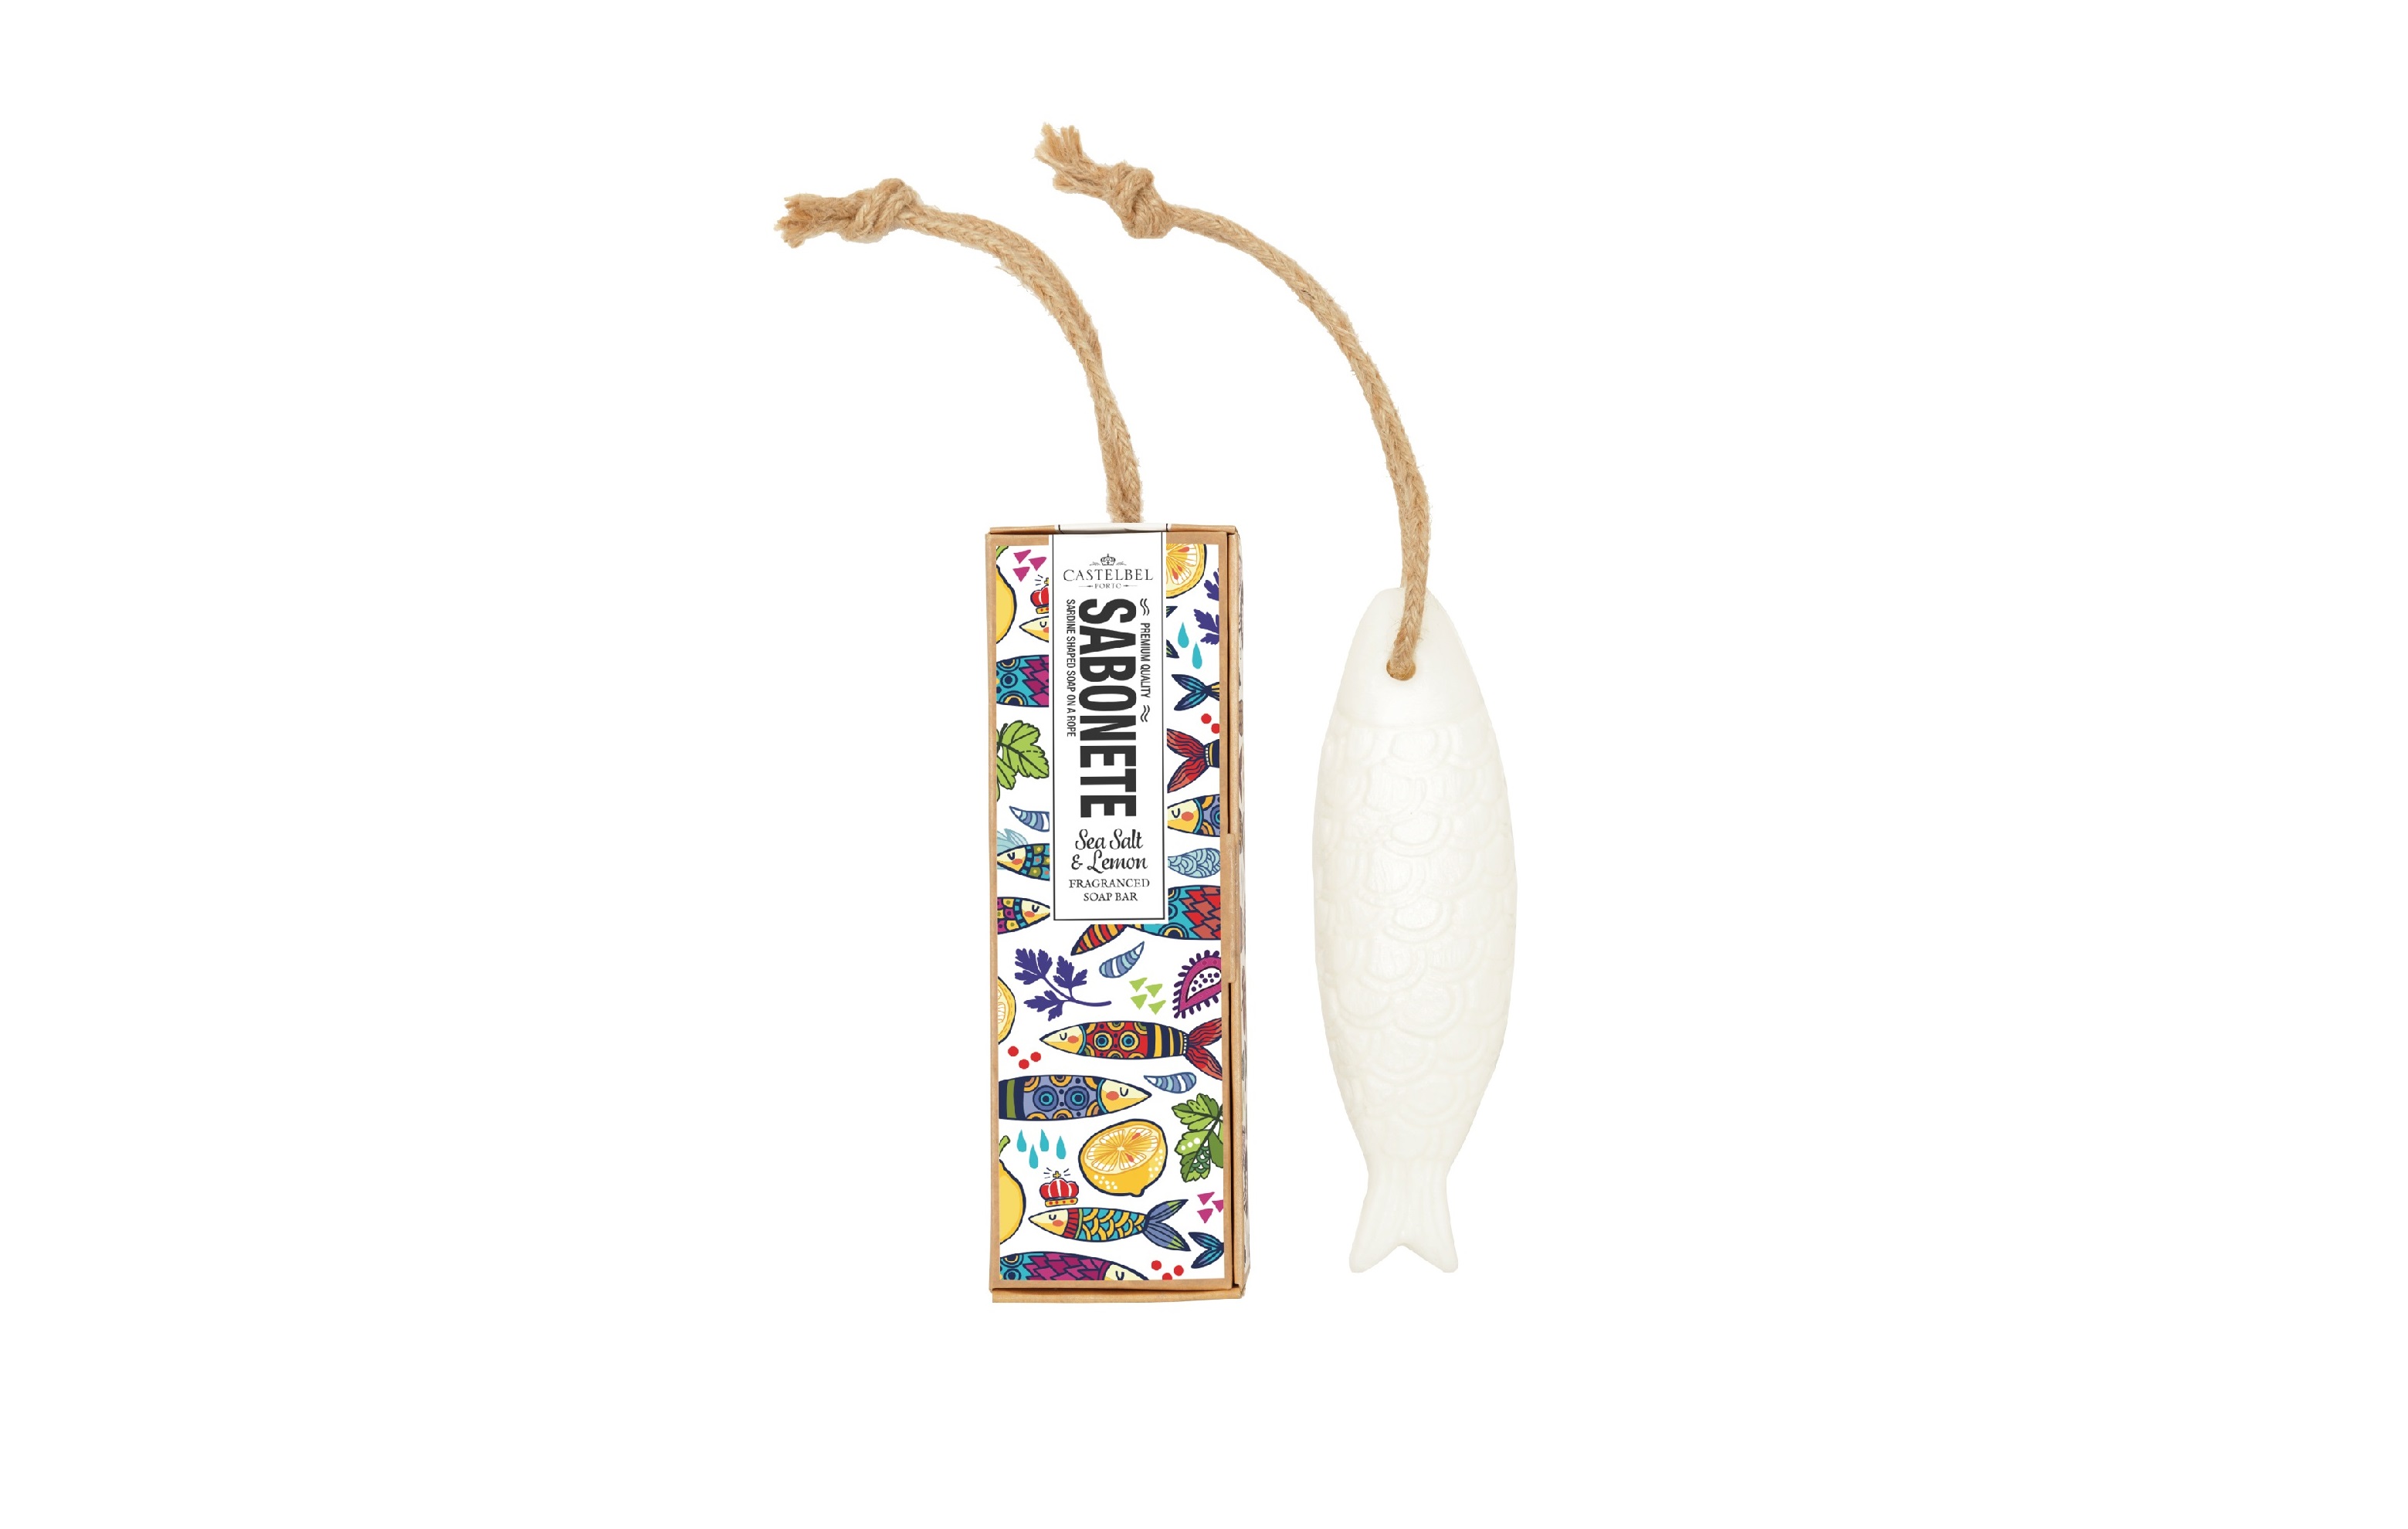 Castelbel Handseife Sardine 100g soap on a rope (+ scented bookmarker)